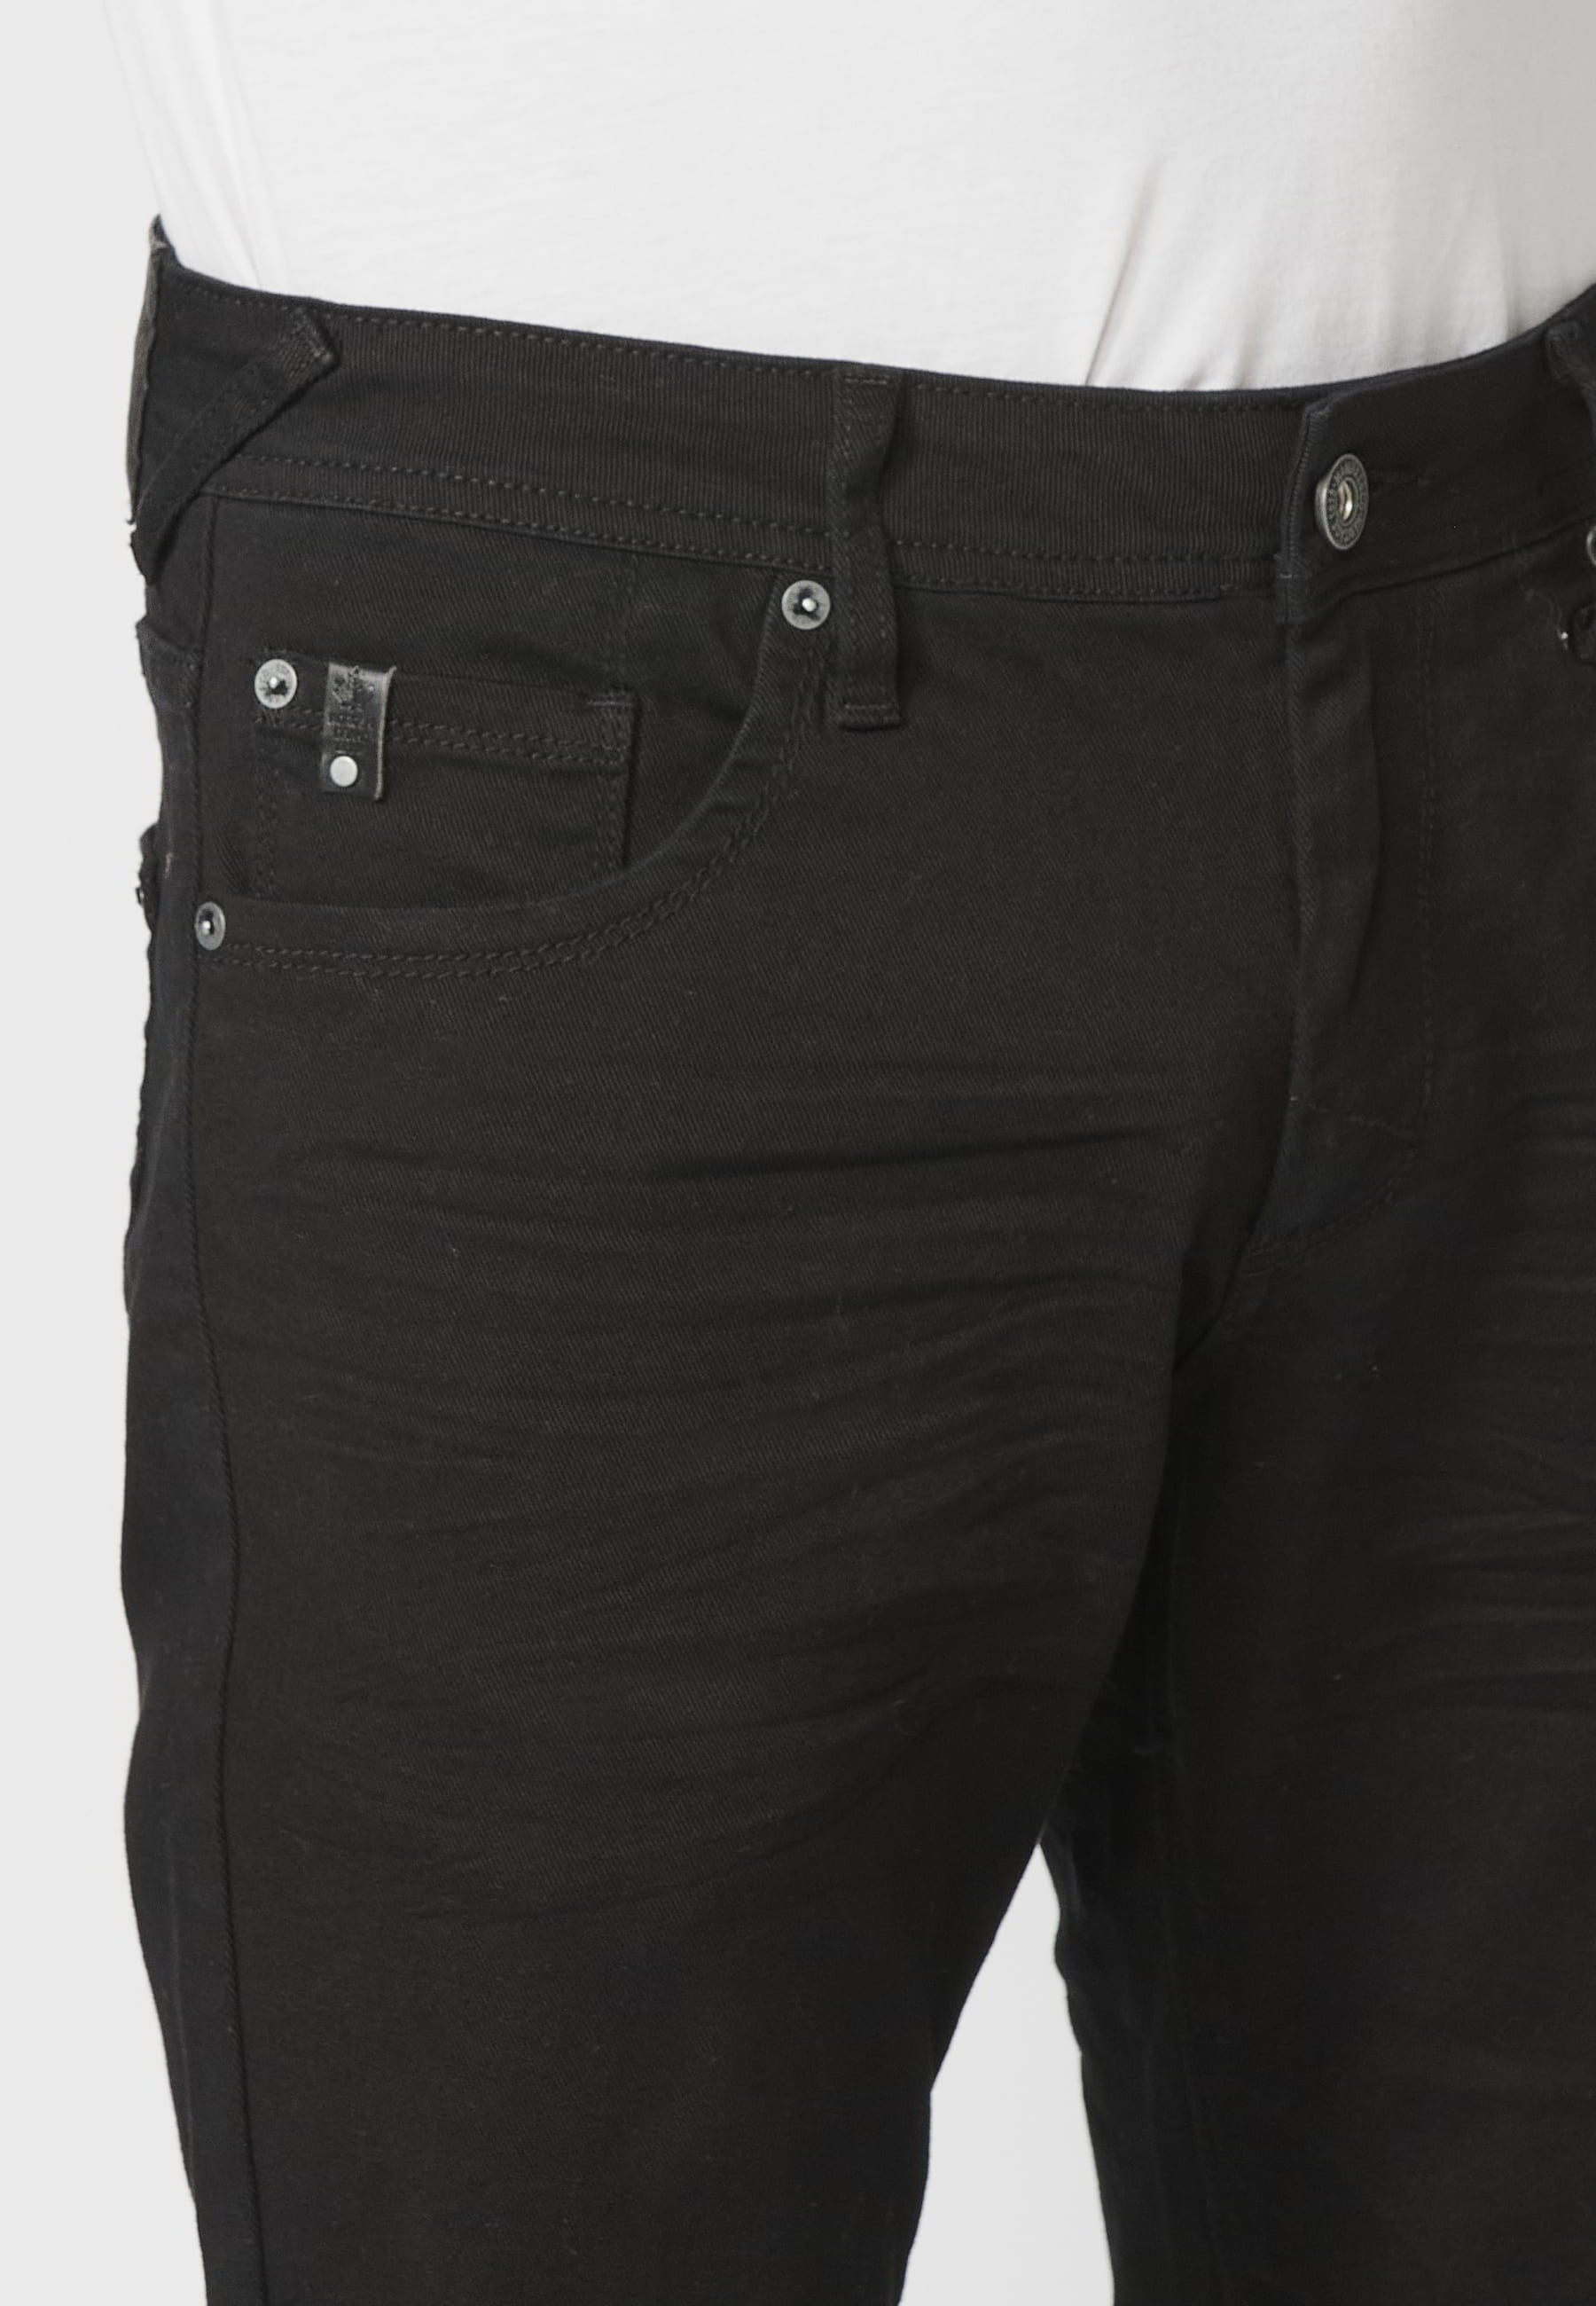 Pantalón largo straigth regular fit, con cinco bolsillos, color Negro, para Hombre